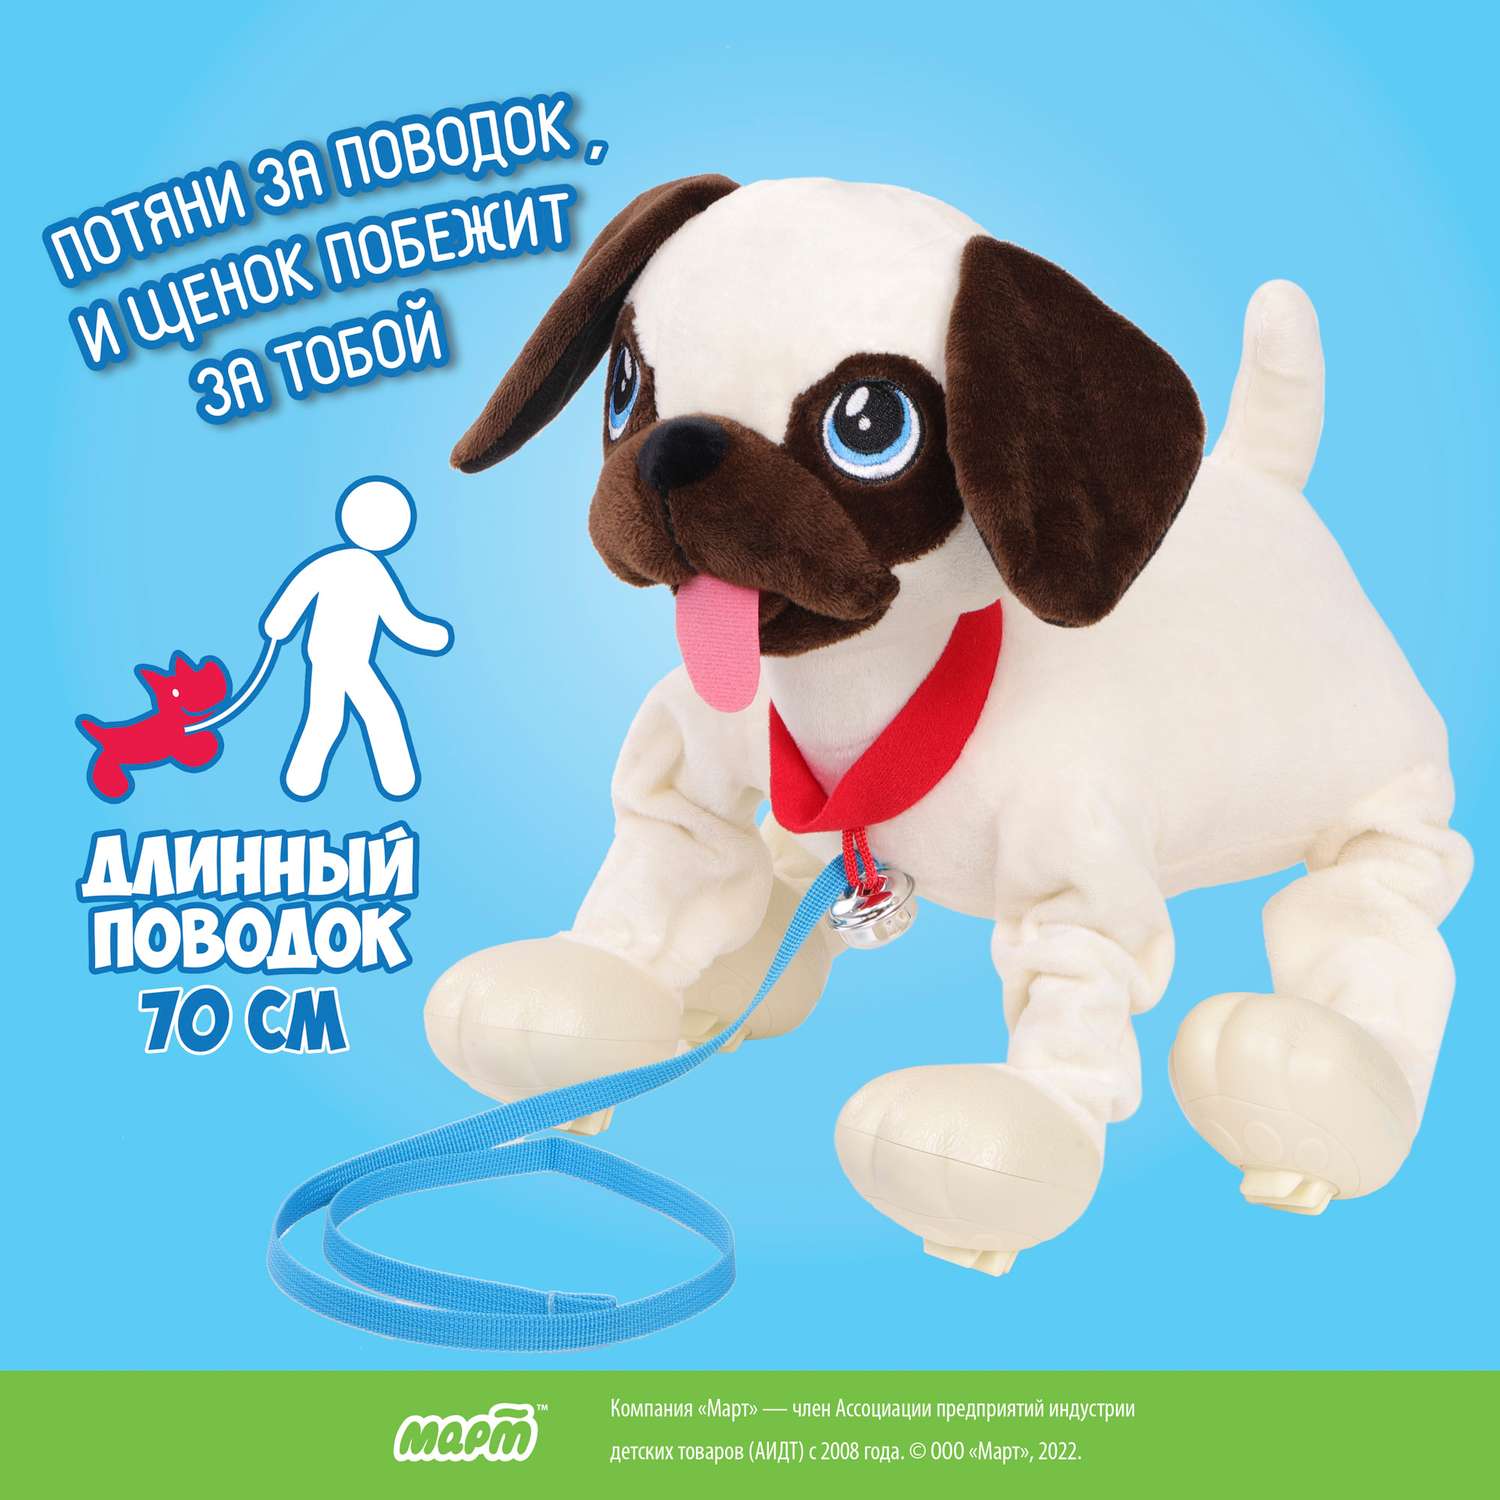 Интерактивная игрушка Собачка-Шагачка собачка на поводке Мопс - фото 10